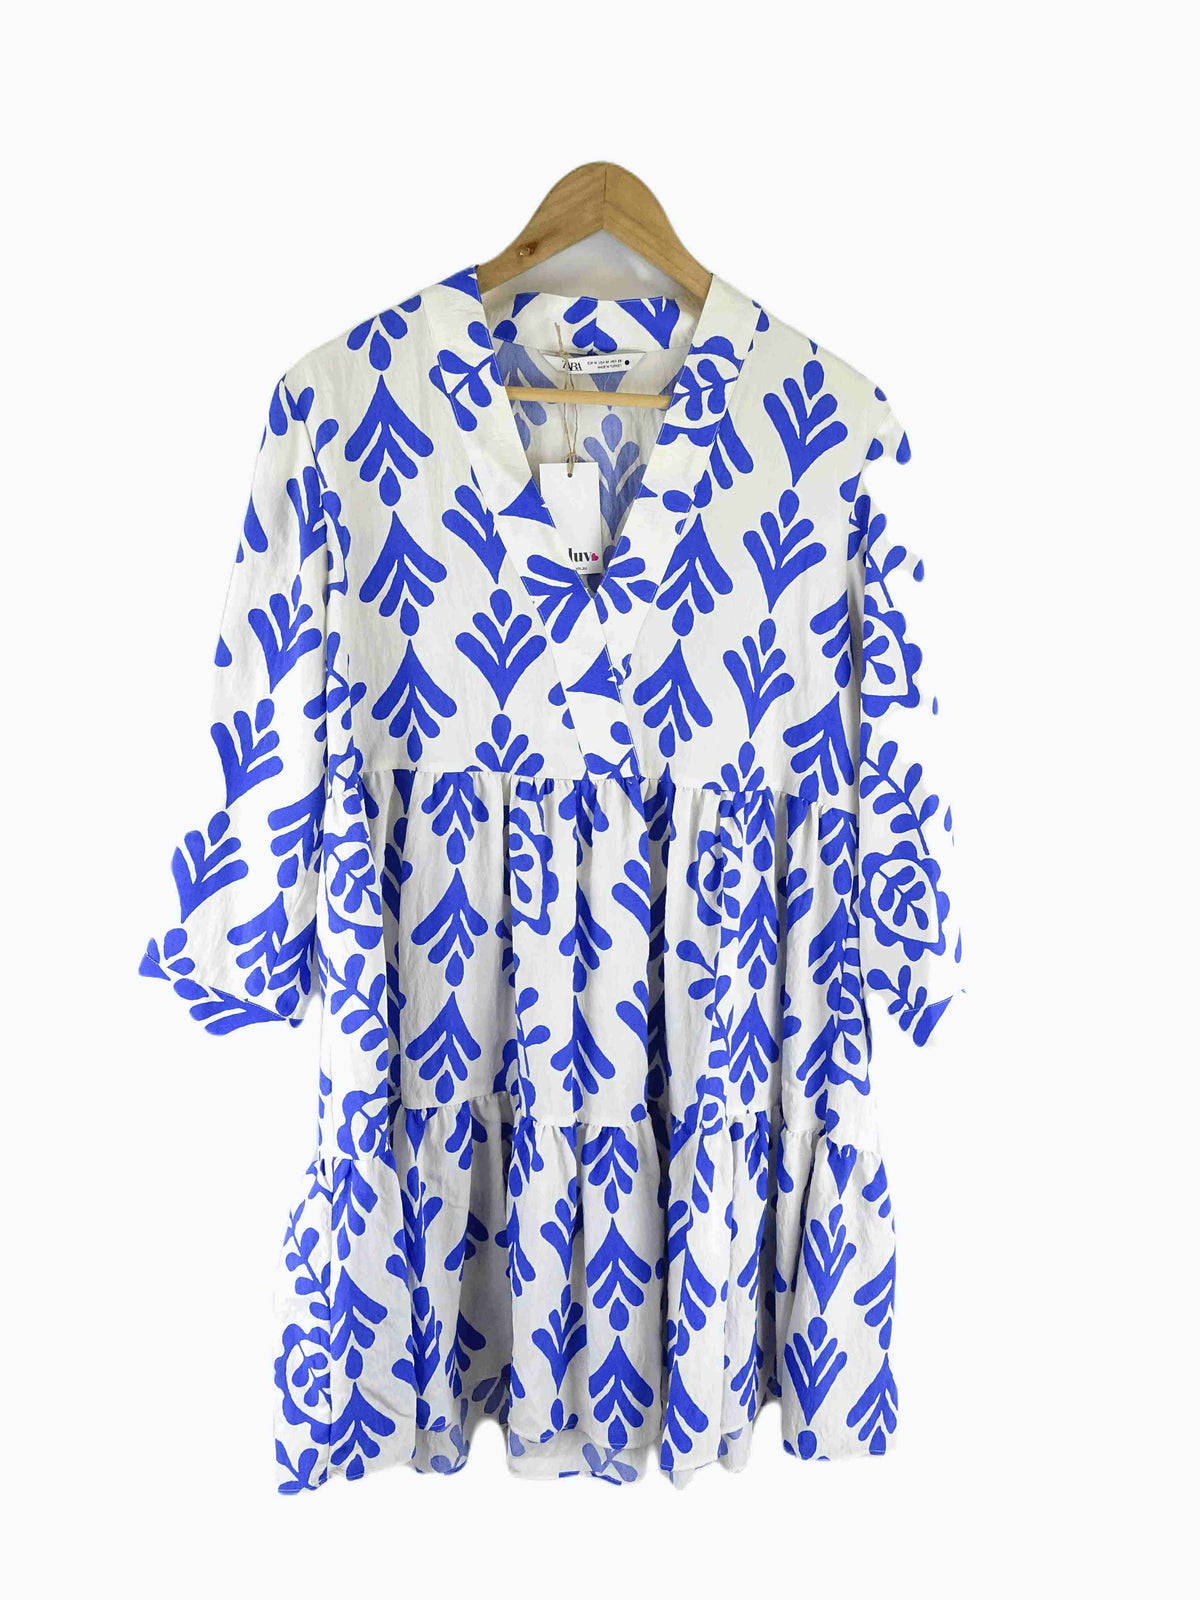 Zara Blue and White Patterned Dress M